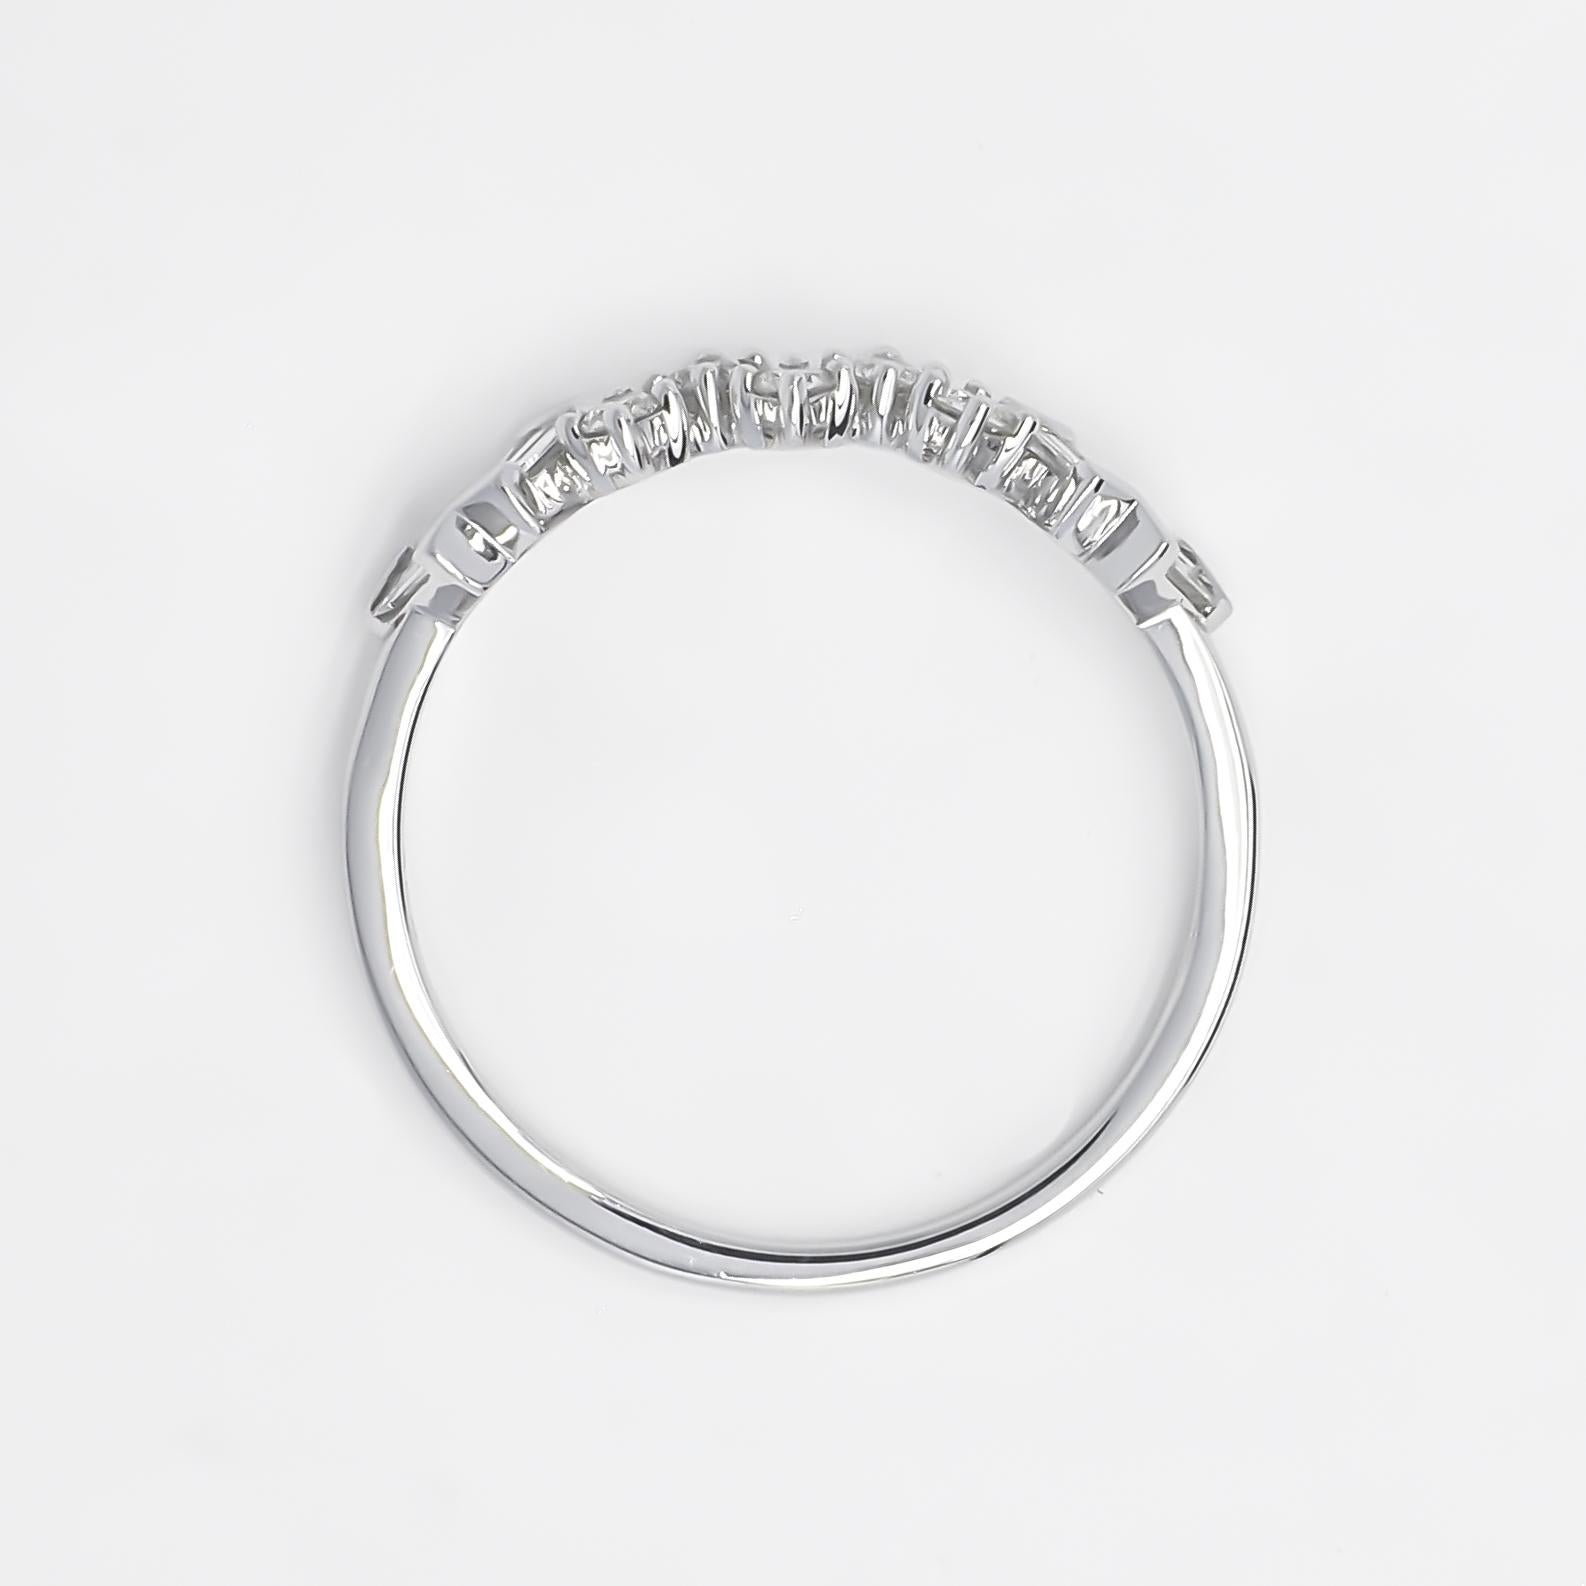 For Sale:  Natural Diamond Ring 18k White Gold Single Row Ring, Minimalistic Diamond Ring 4